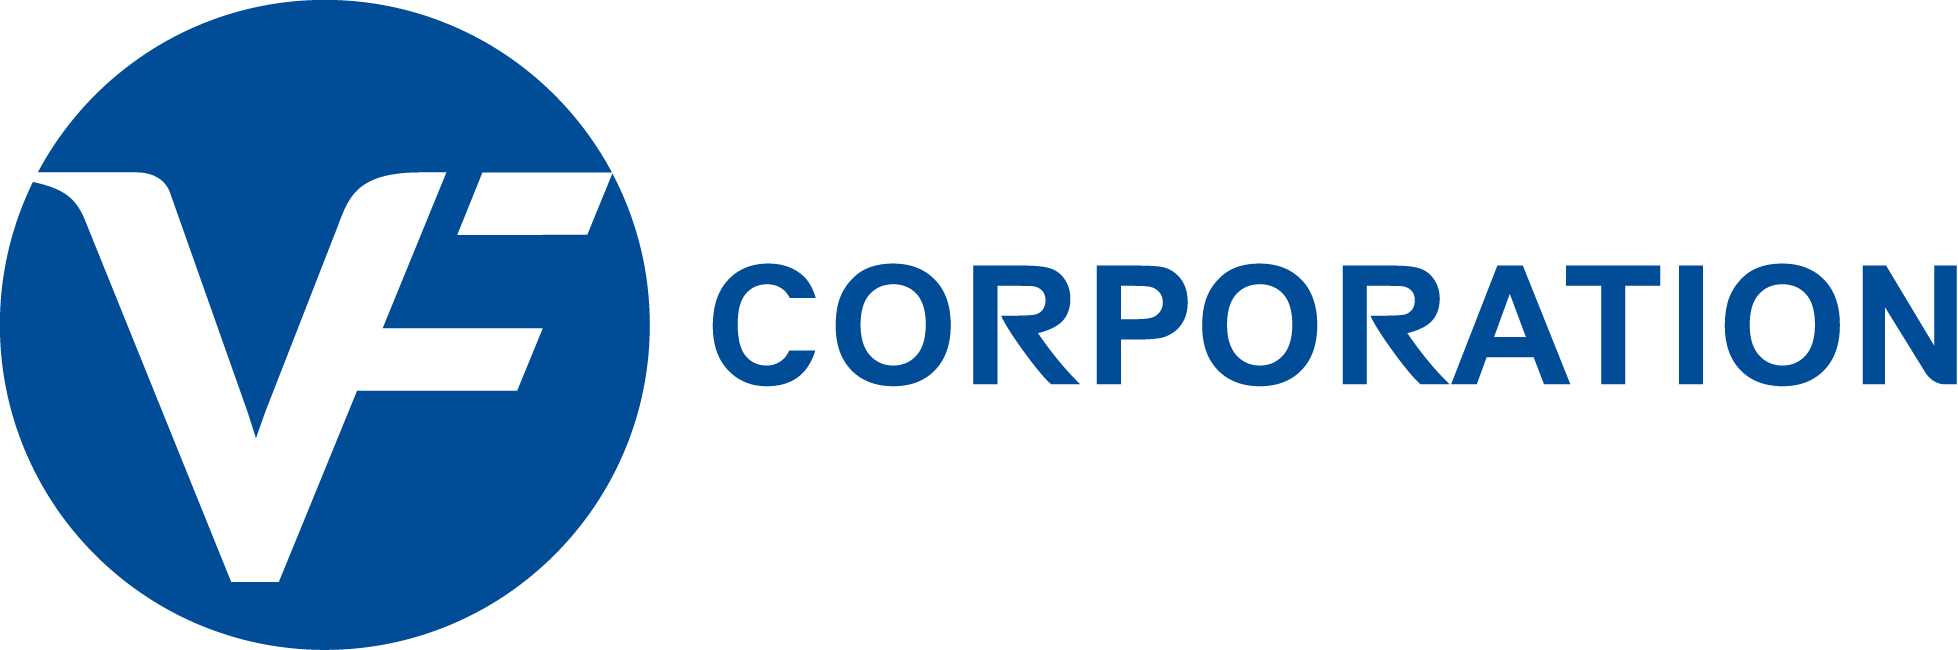 VF_Corp_logo